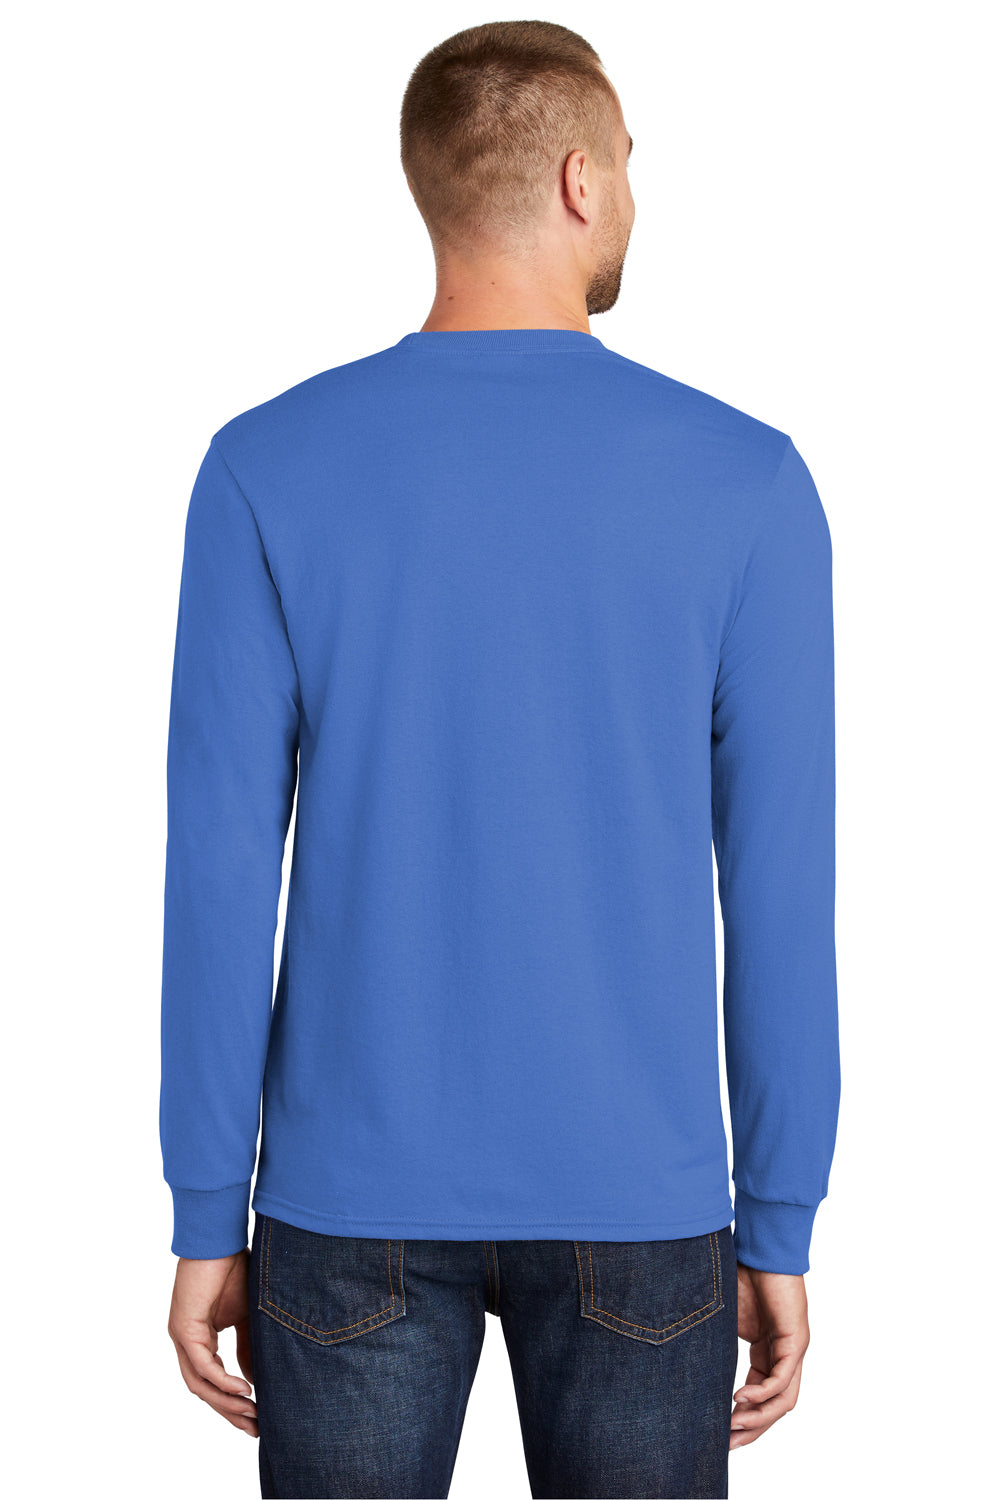 Port & Company PC55LS Mens Core Long Sleeve Crewneck T-Shirt Royal Blue Back